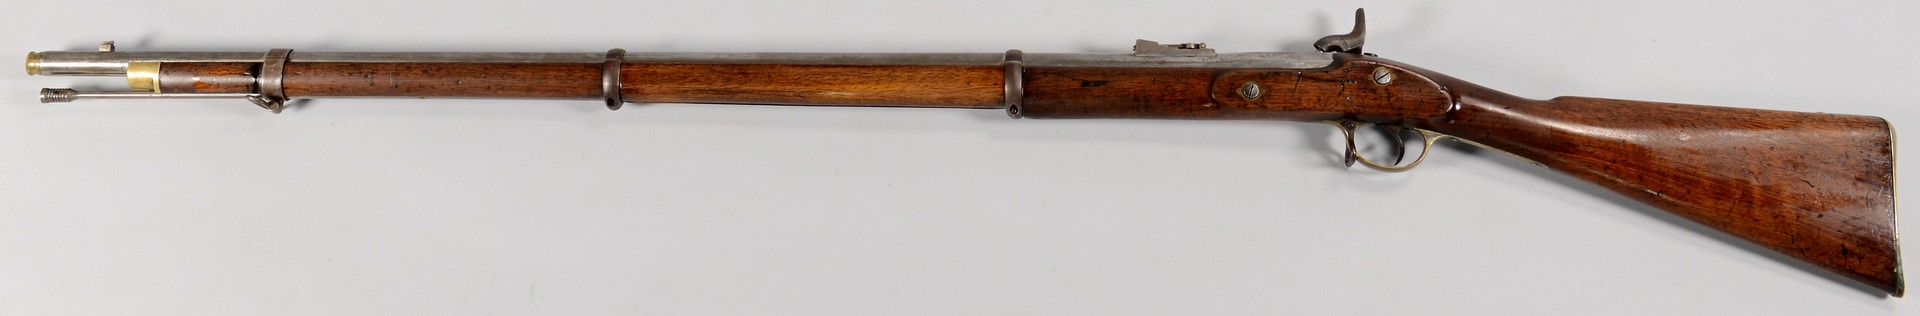 Lot 505: 1863 Victoria Regalius Enfield Rifled Musket